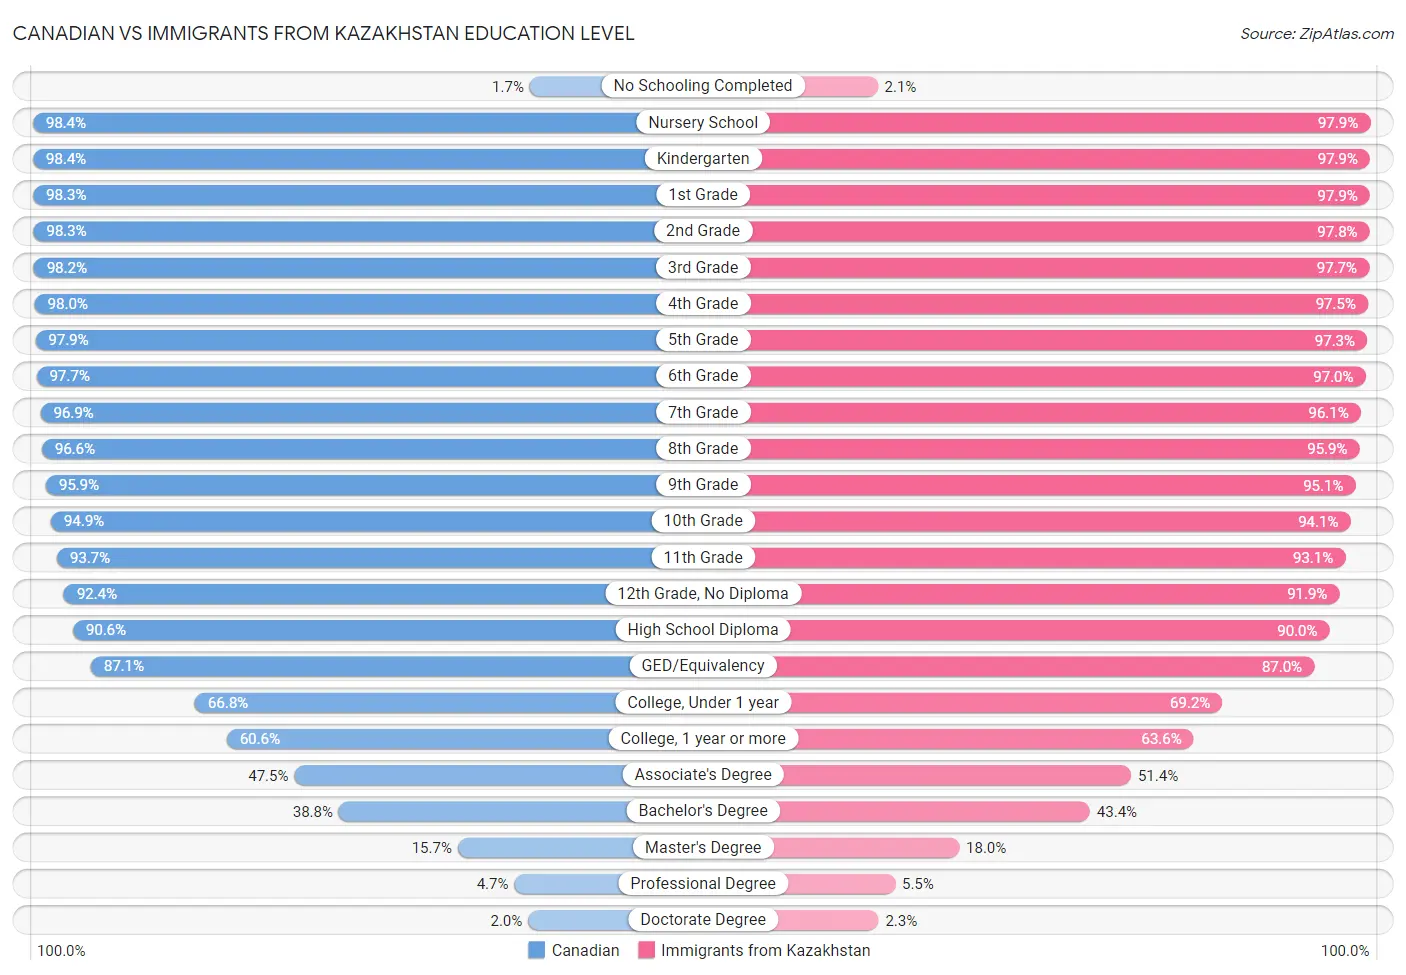 Canadian vs Immigrants from Kazakhstan Education Level